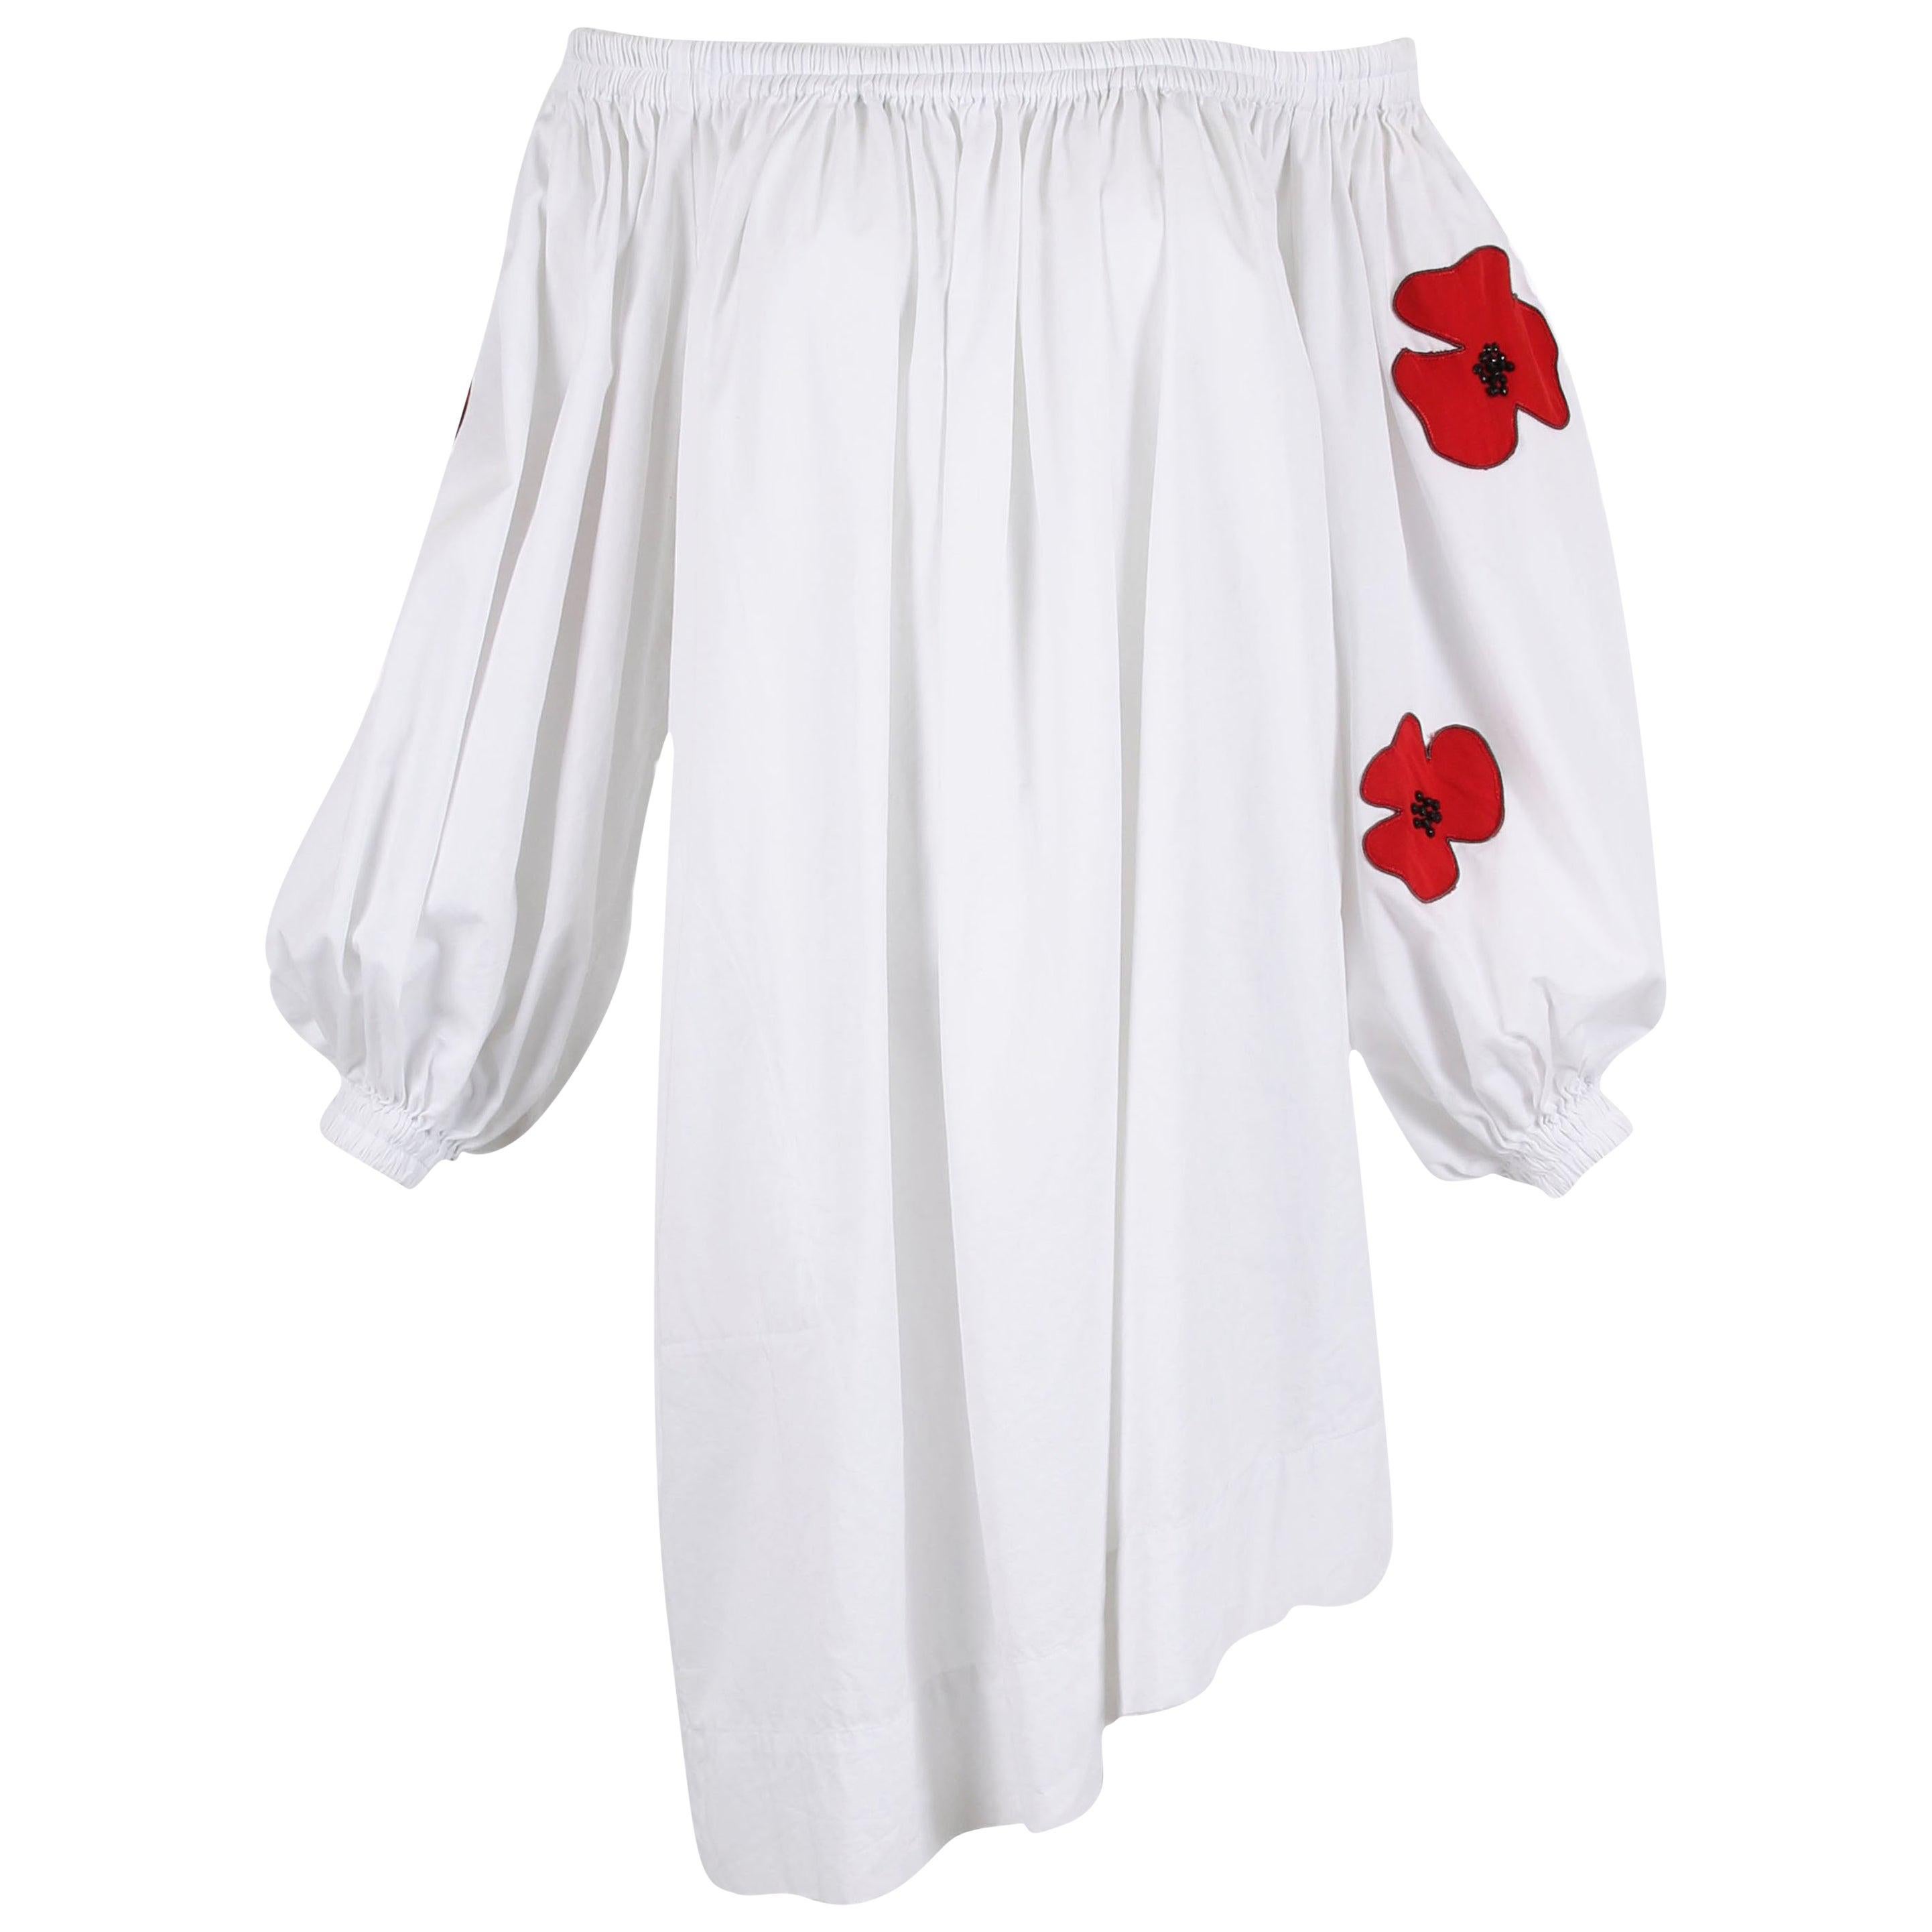 Yves Saint Laurent YSL White Cotton Asymmetric Dress with Poppies